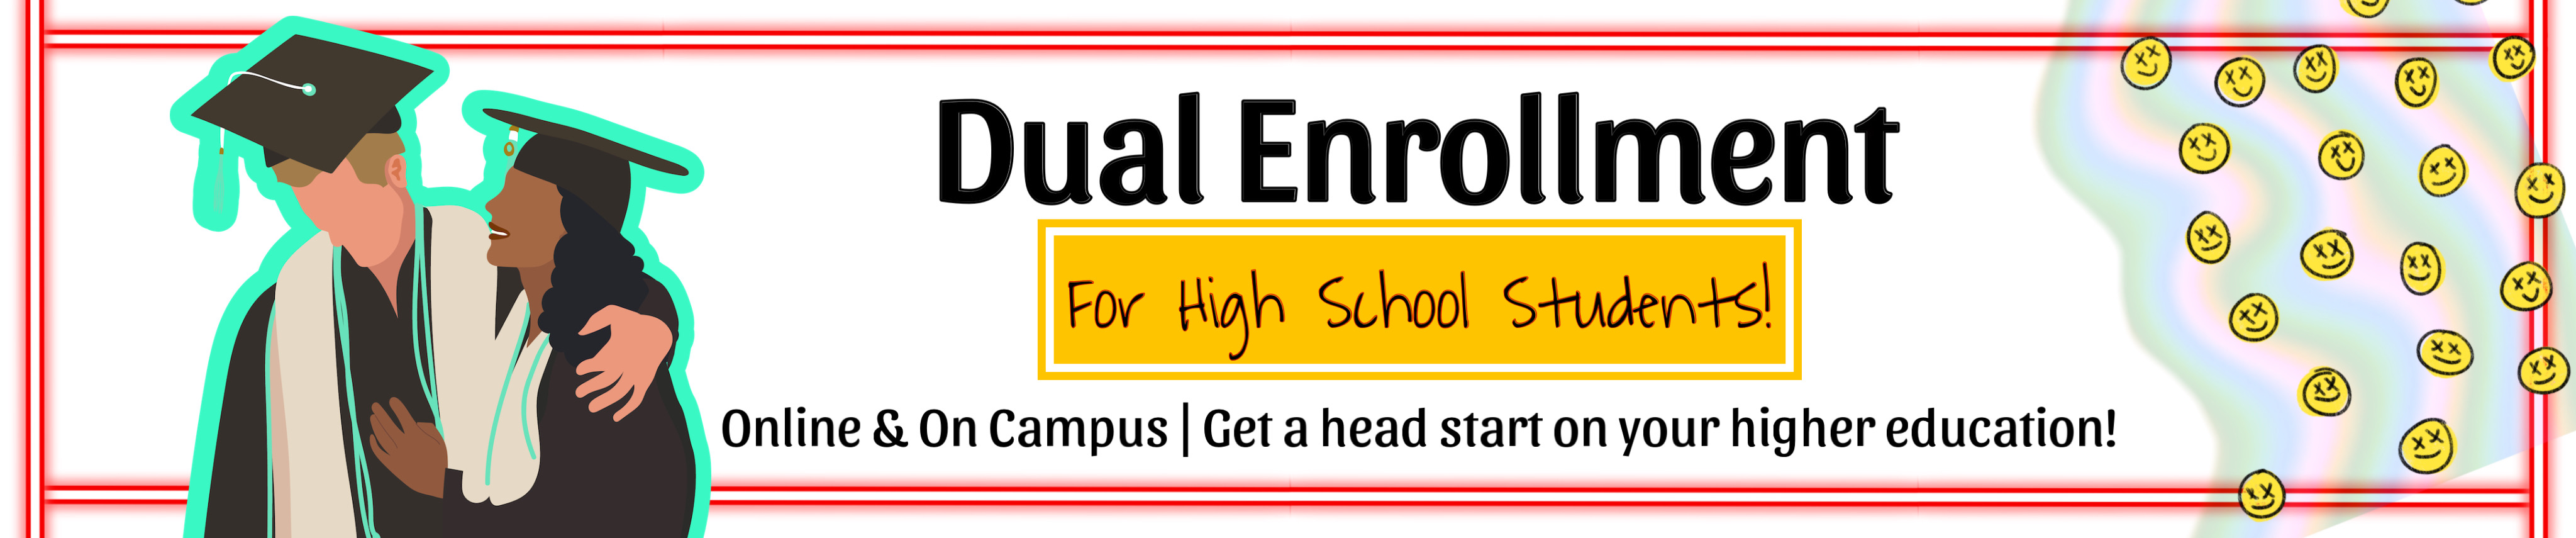 .Dual Enrollment for High School Students..